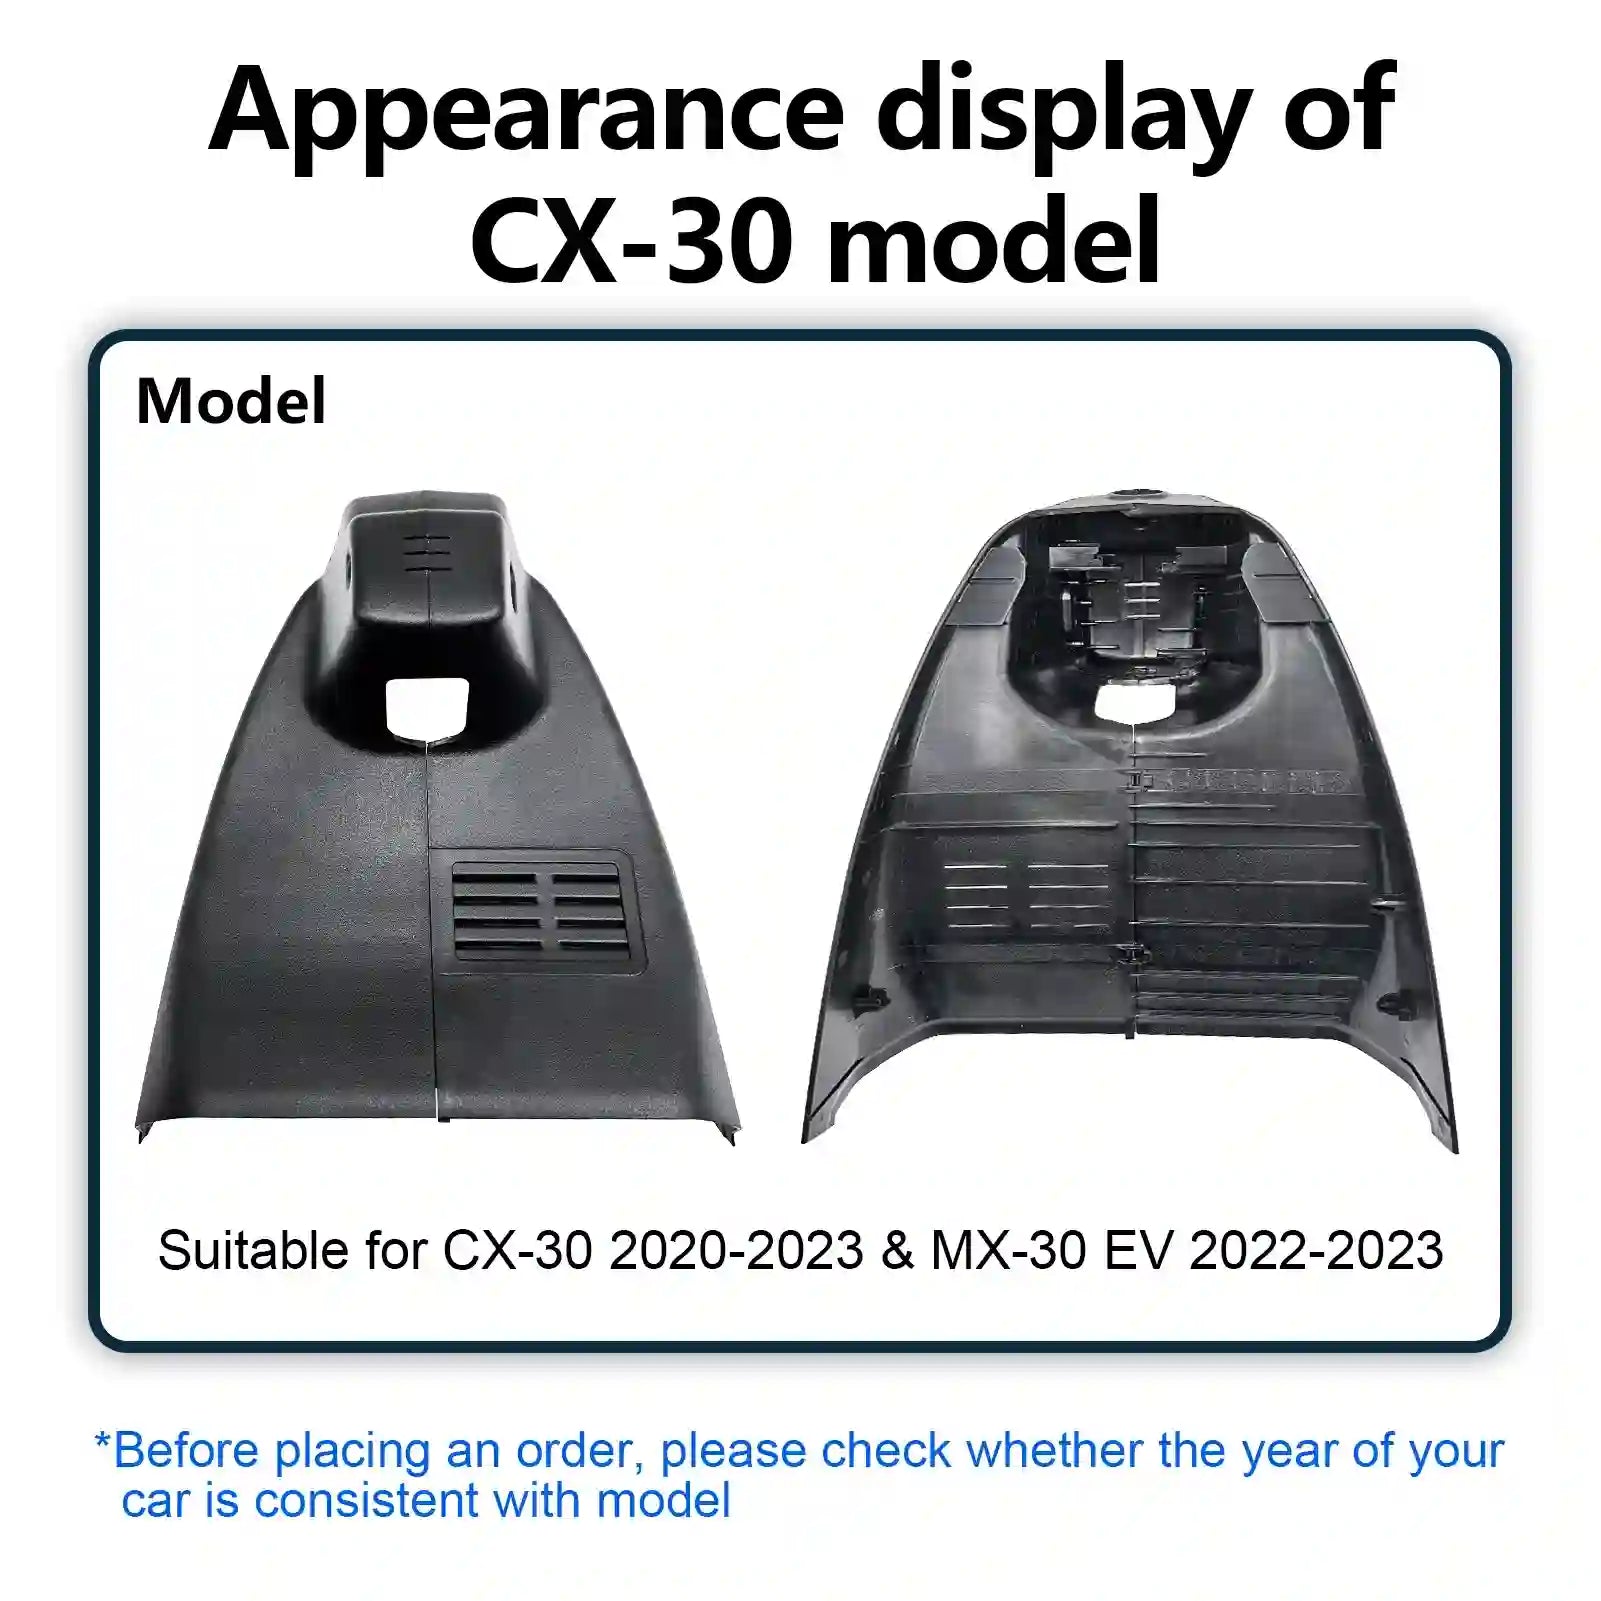 Front 4K & Rear 1080p Dash Cam Custom fit for Mazda CX-30 2020 2021 2022 2023 & MX-30 EV 2022-2023(Model A), UHD 2160P Video, Free App & Wifi, 128GB Card